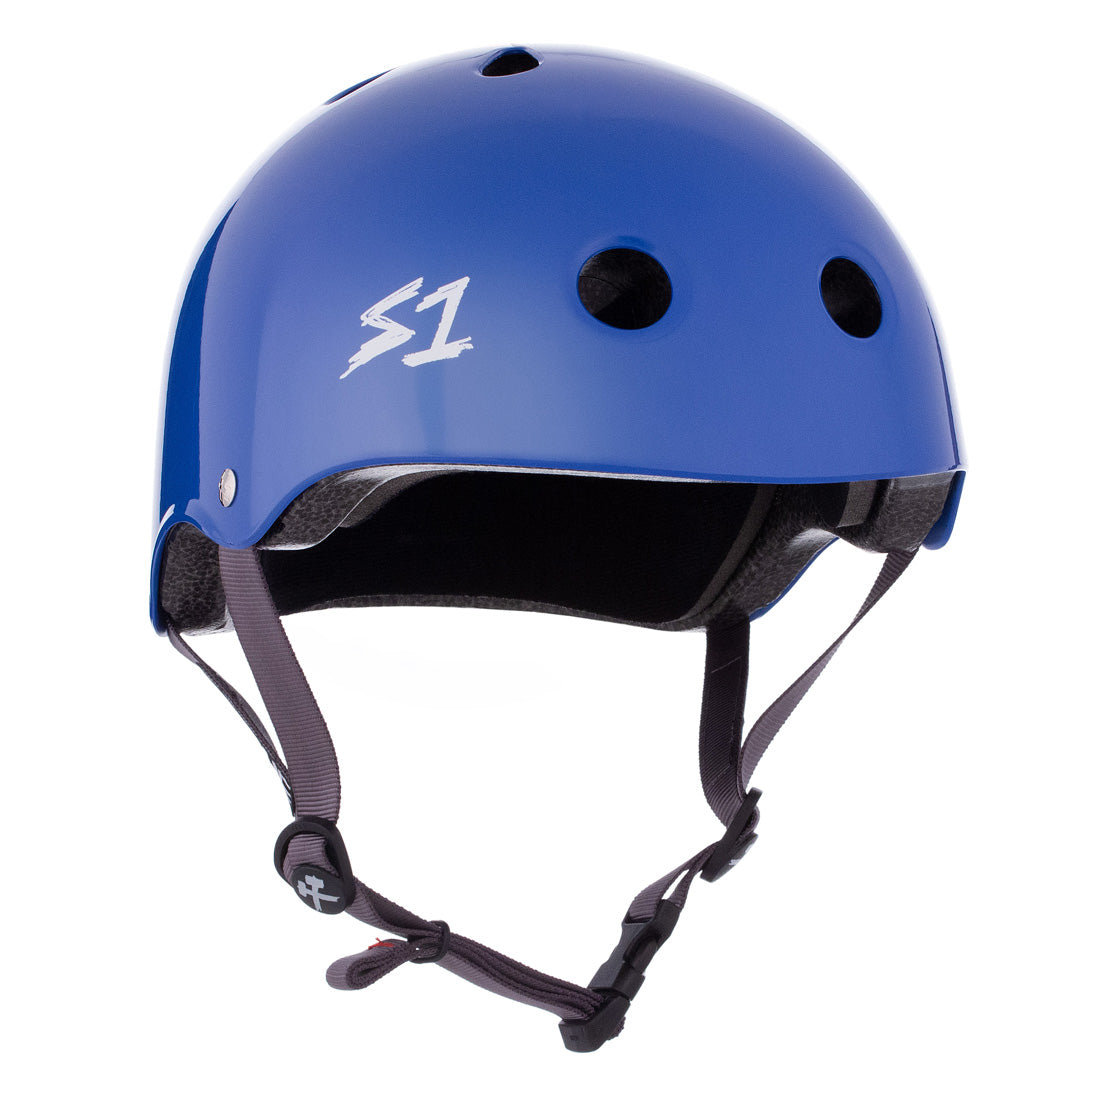 S-One Lifer Helmet - LA Blue Gloss Helmets